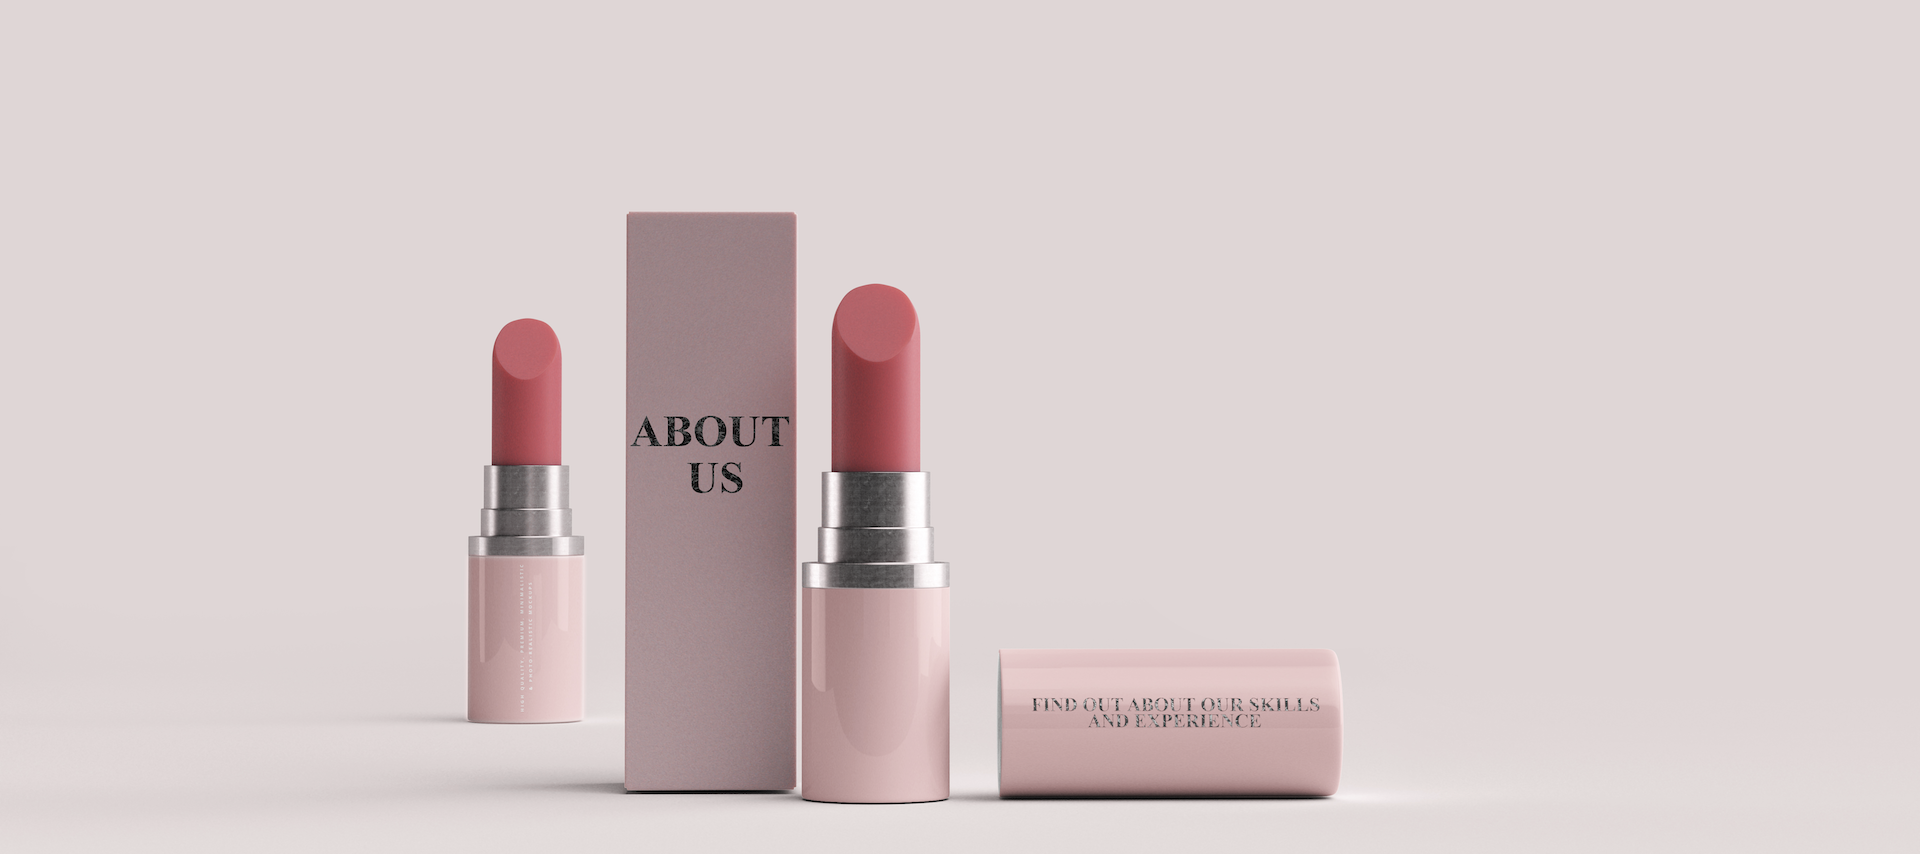 About Us lipsticks close